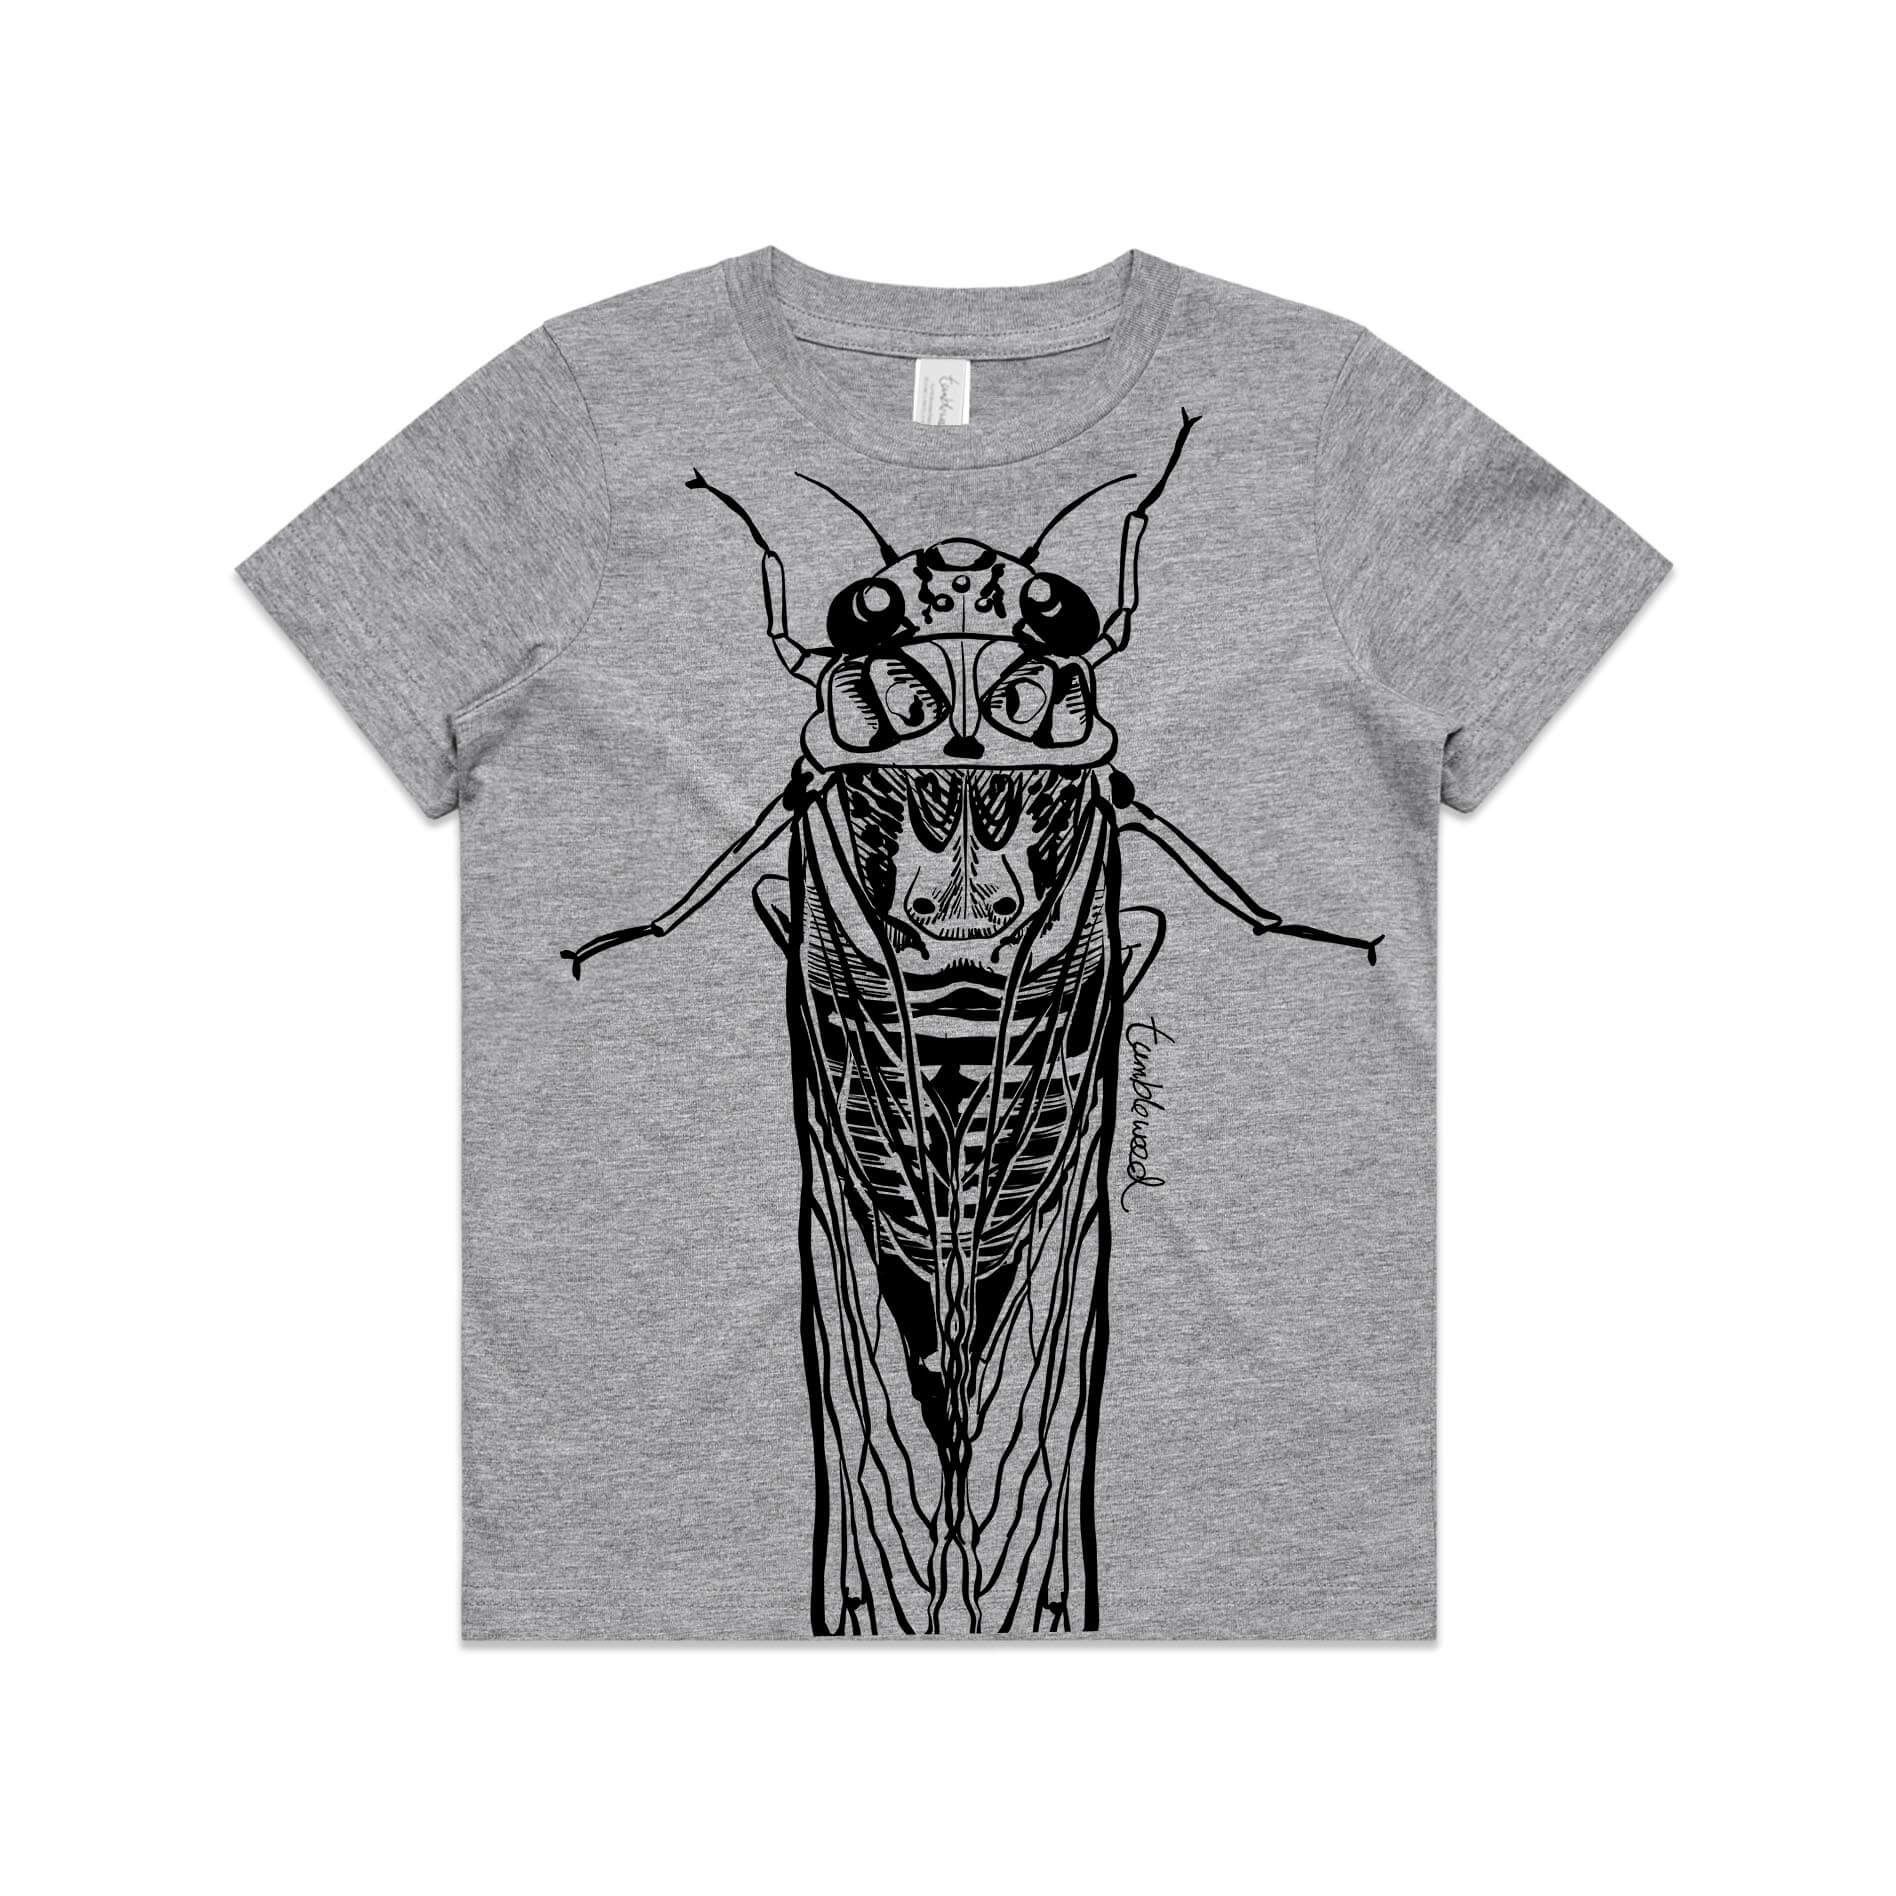 Grey marle, cotton kids' t-shirt with screen printed cicada/kihikihi-wawā design.